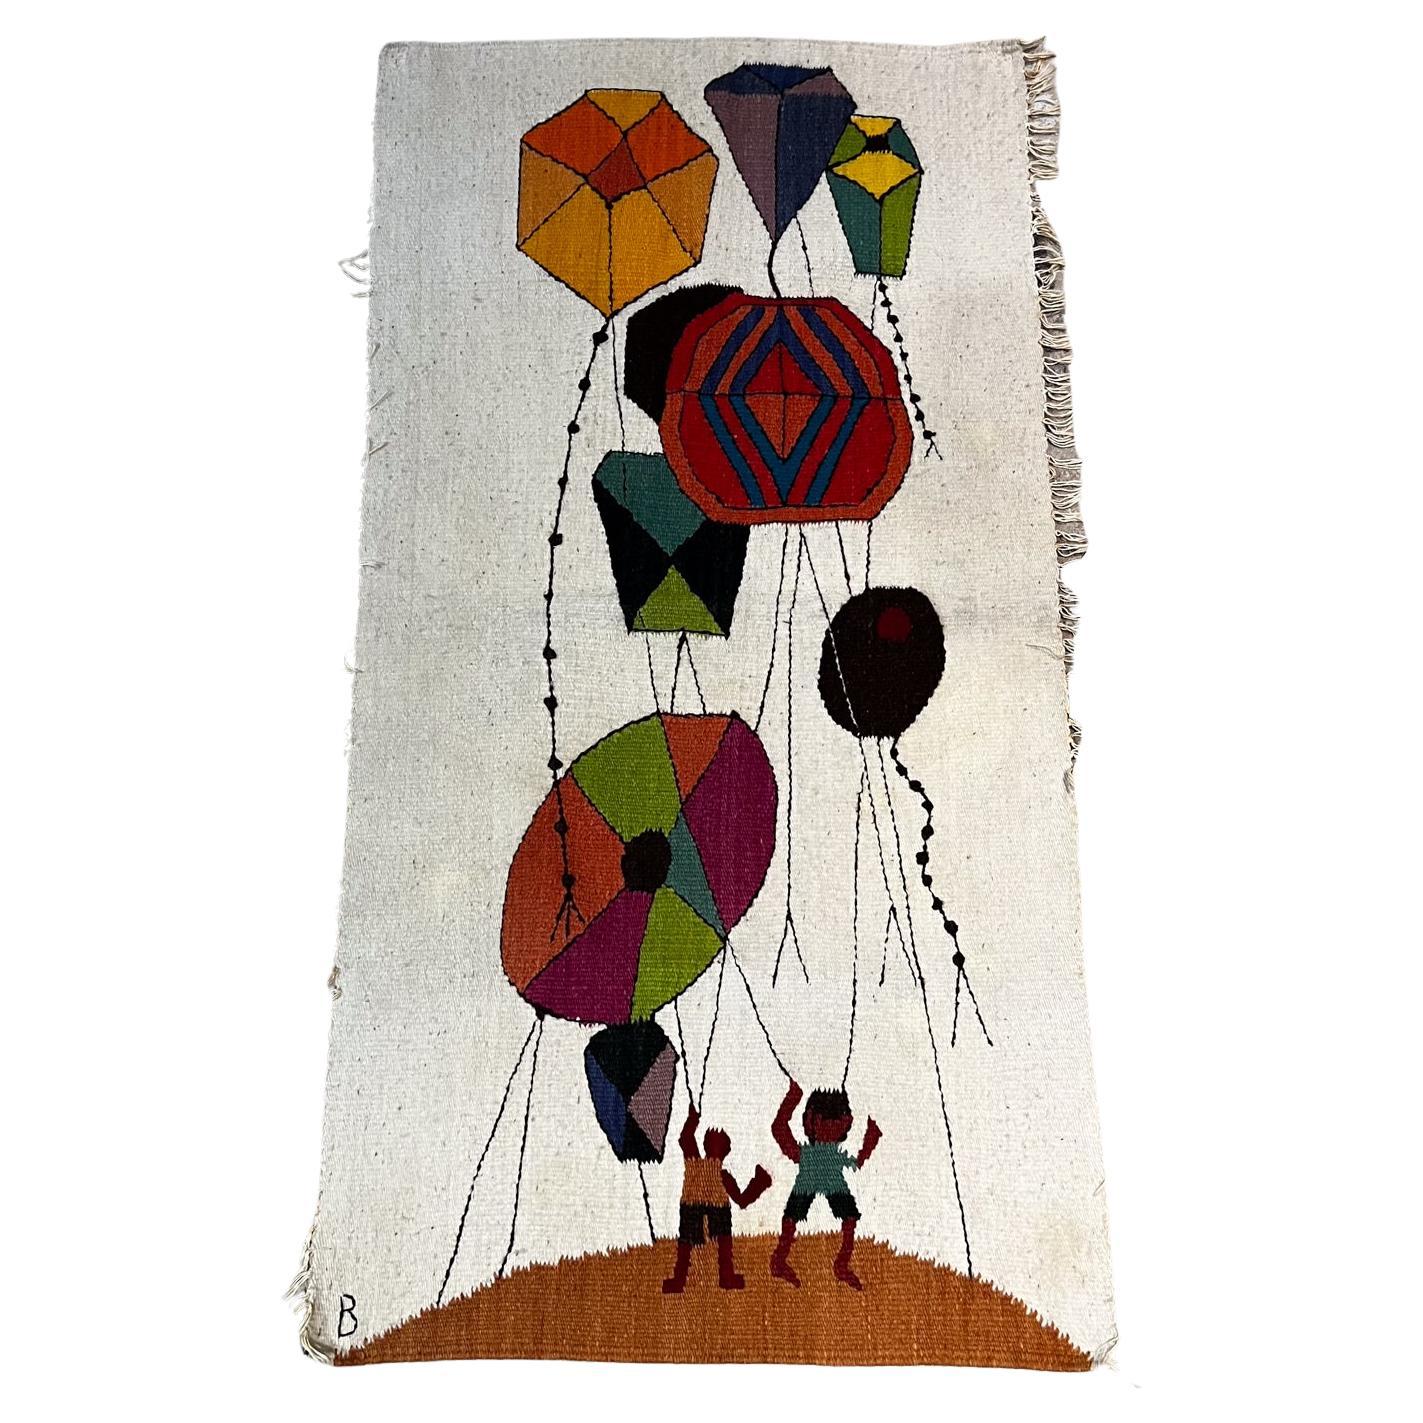 Farb-Wandteppich, Moderne Kinderkite-Kunst, Evelyn Ackerman, 1960er Jahre